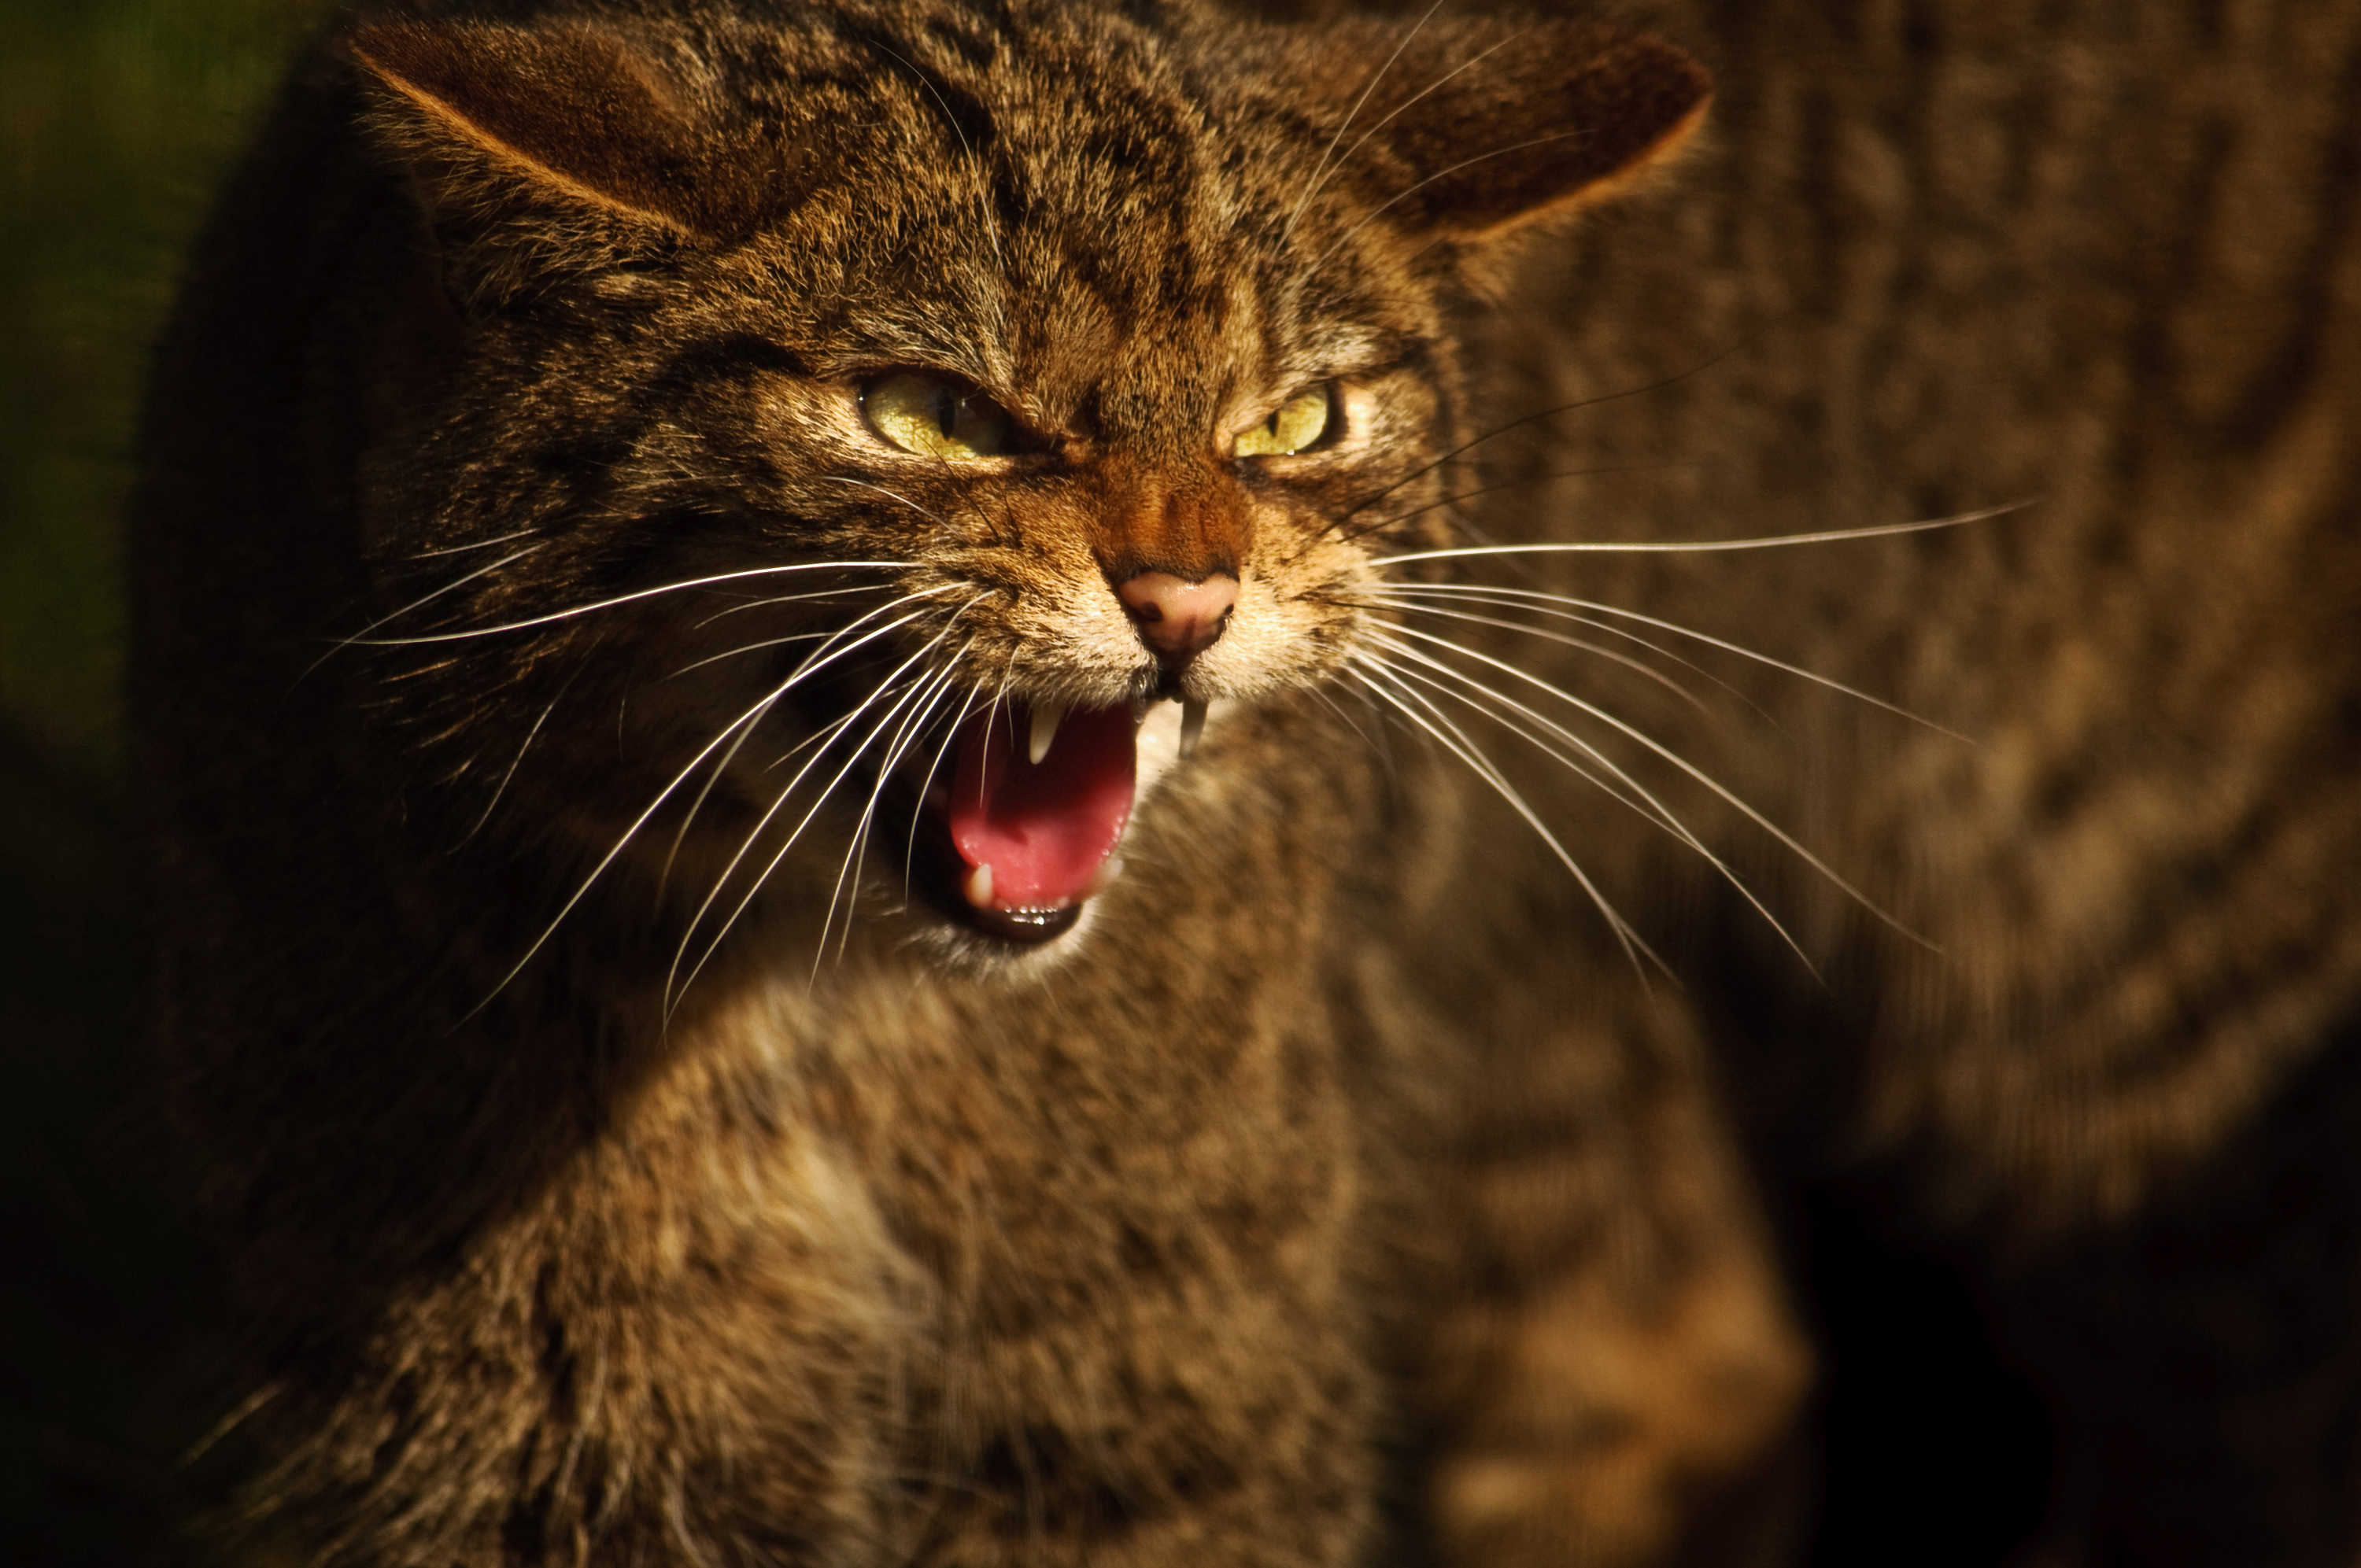 The Scottish wildcat is an endangered species. Credit: Adrian Bennett